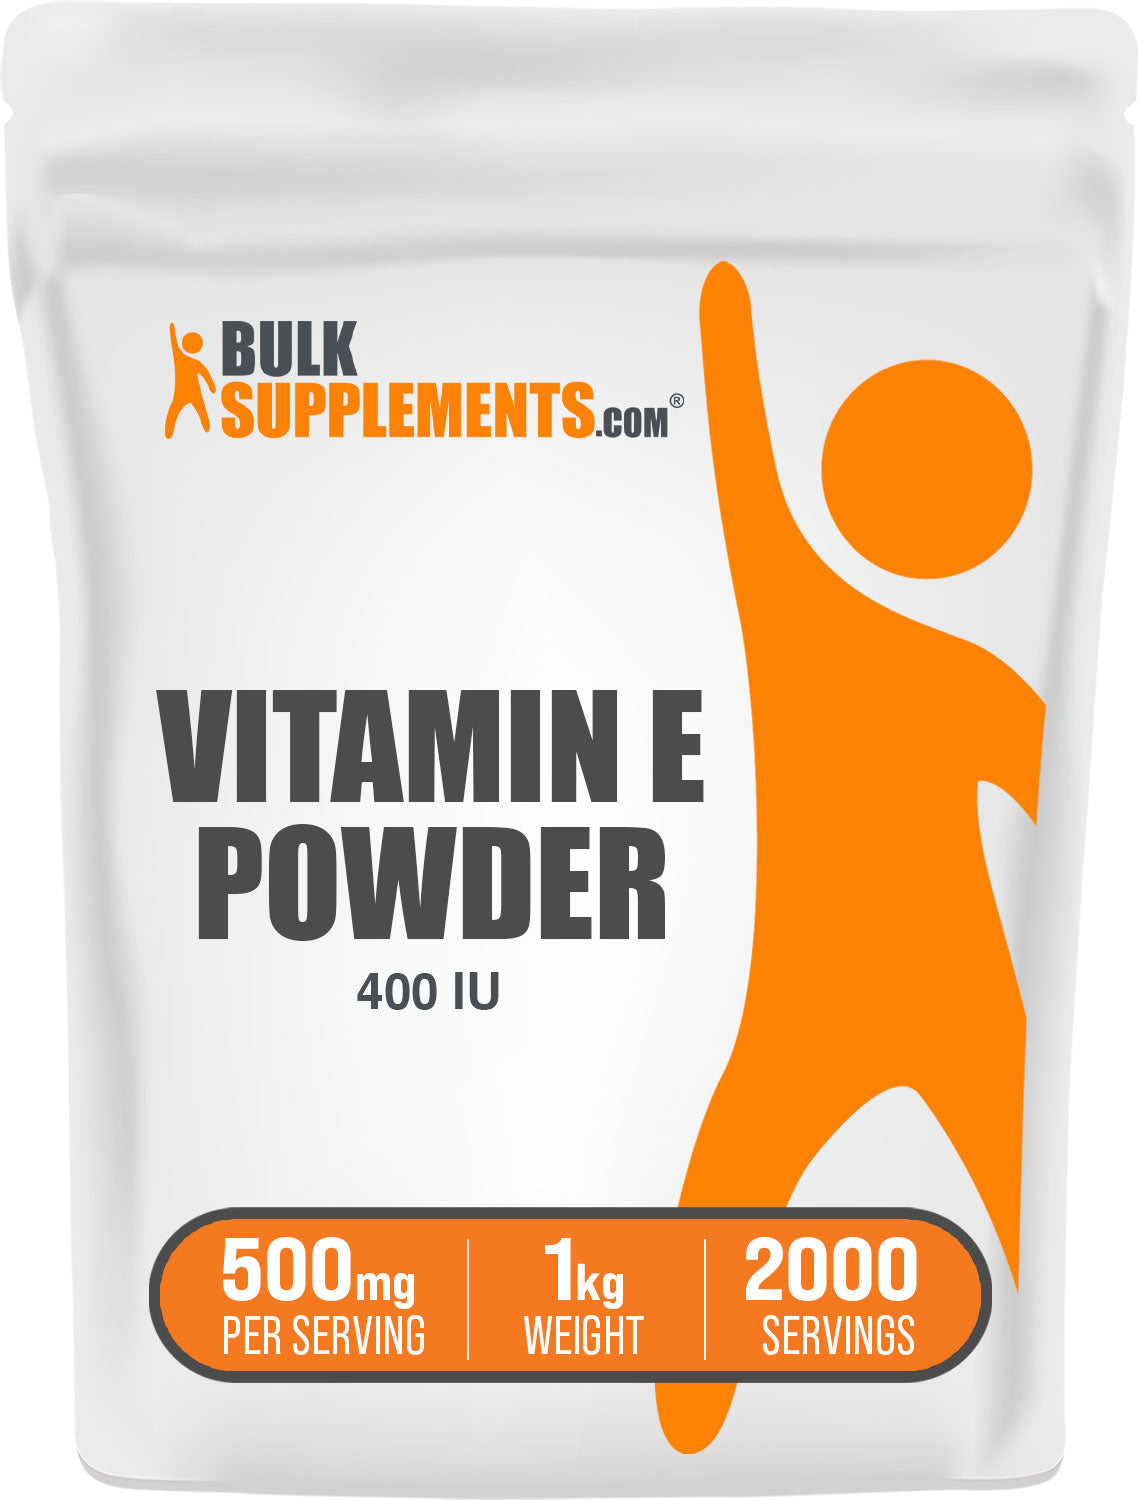 BulkSupplements Vitamin E Powder 400 IU 1kg bag